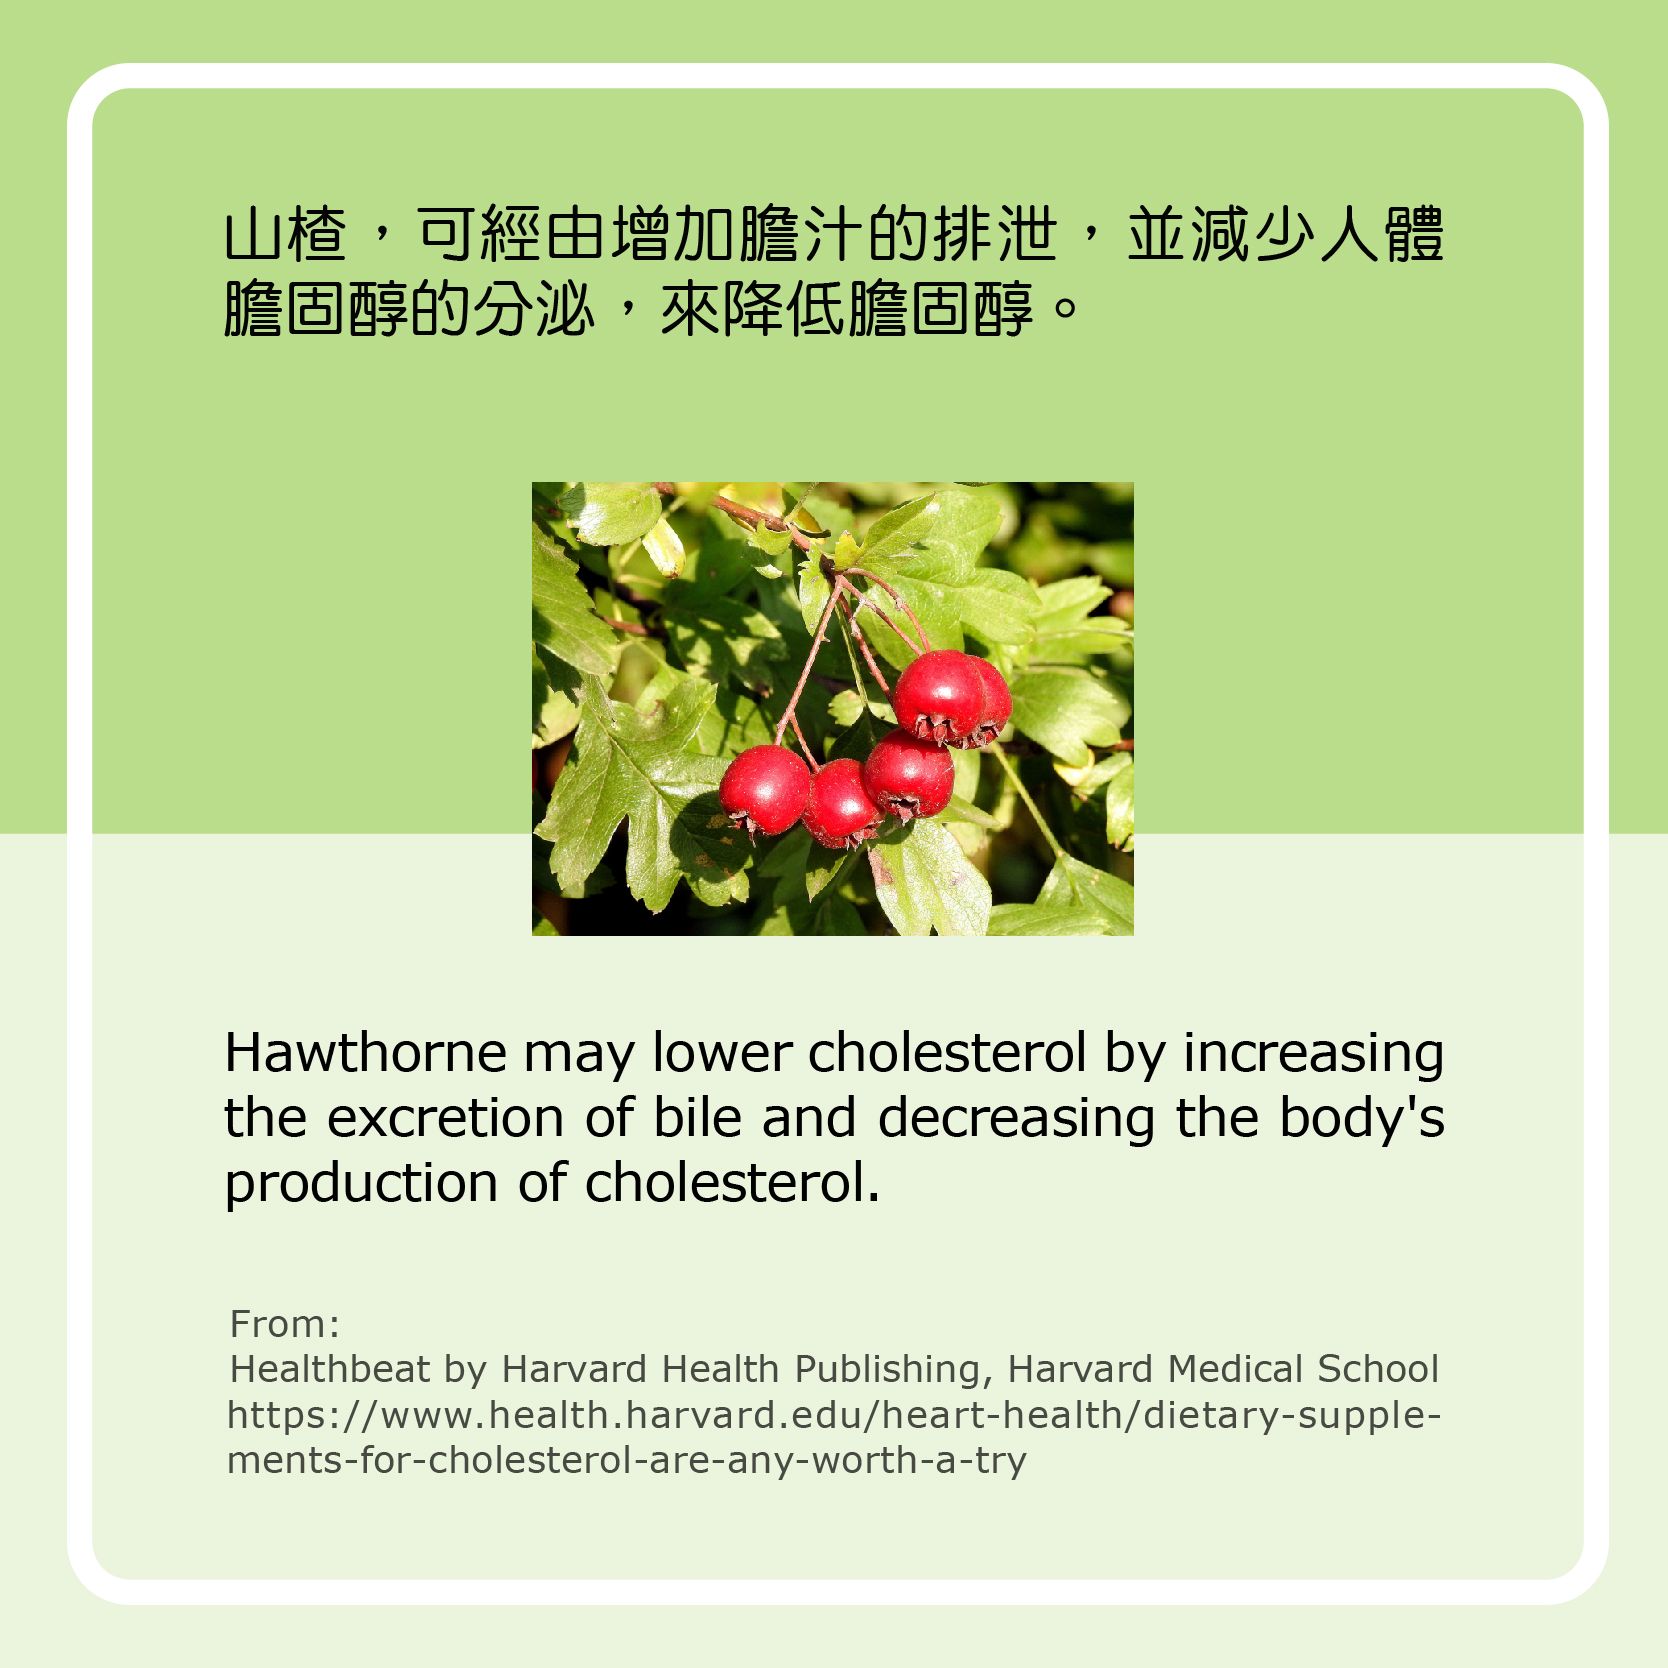 berrybeat Hawthorne